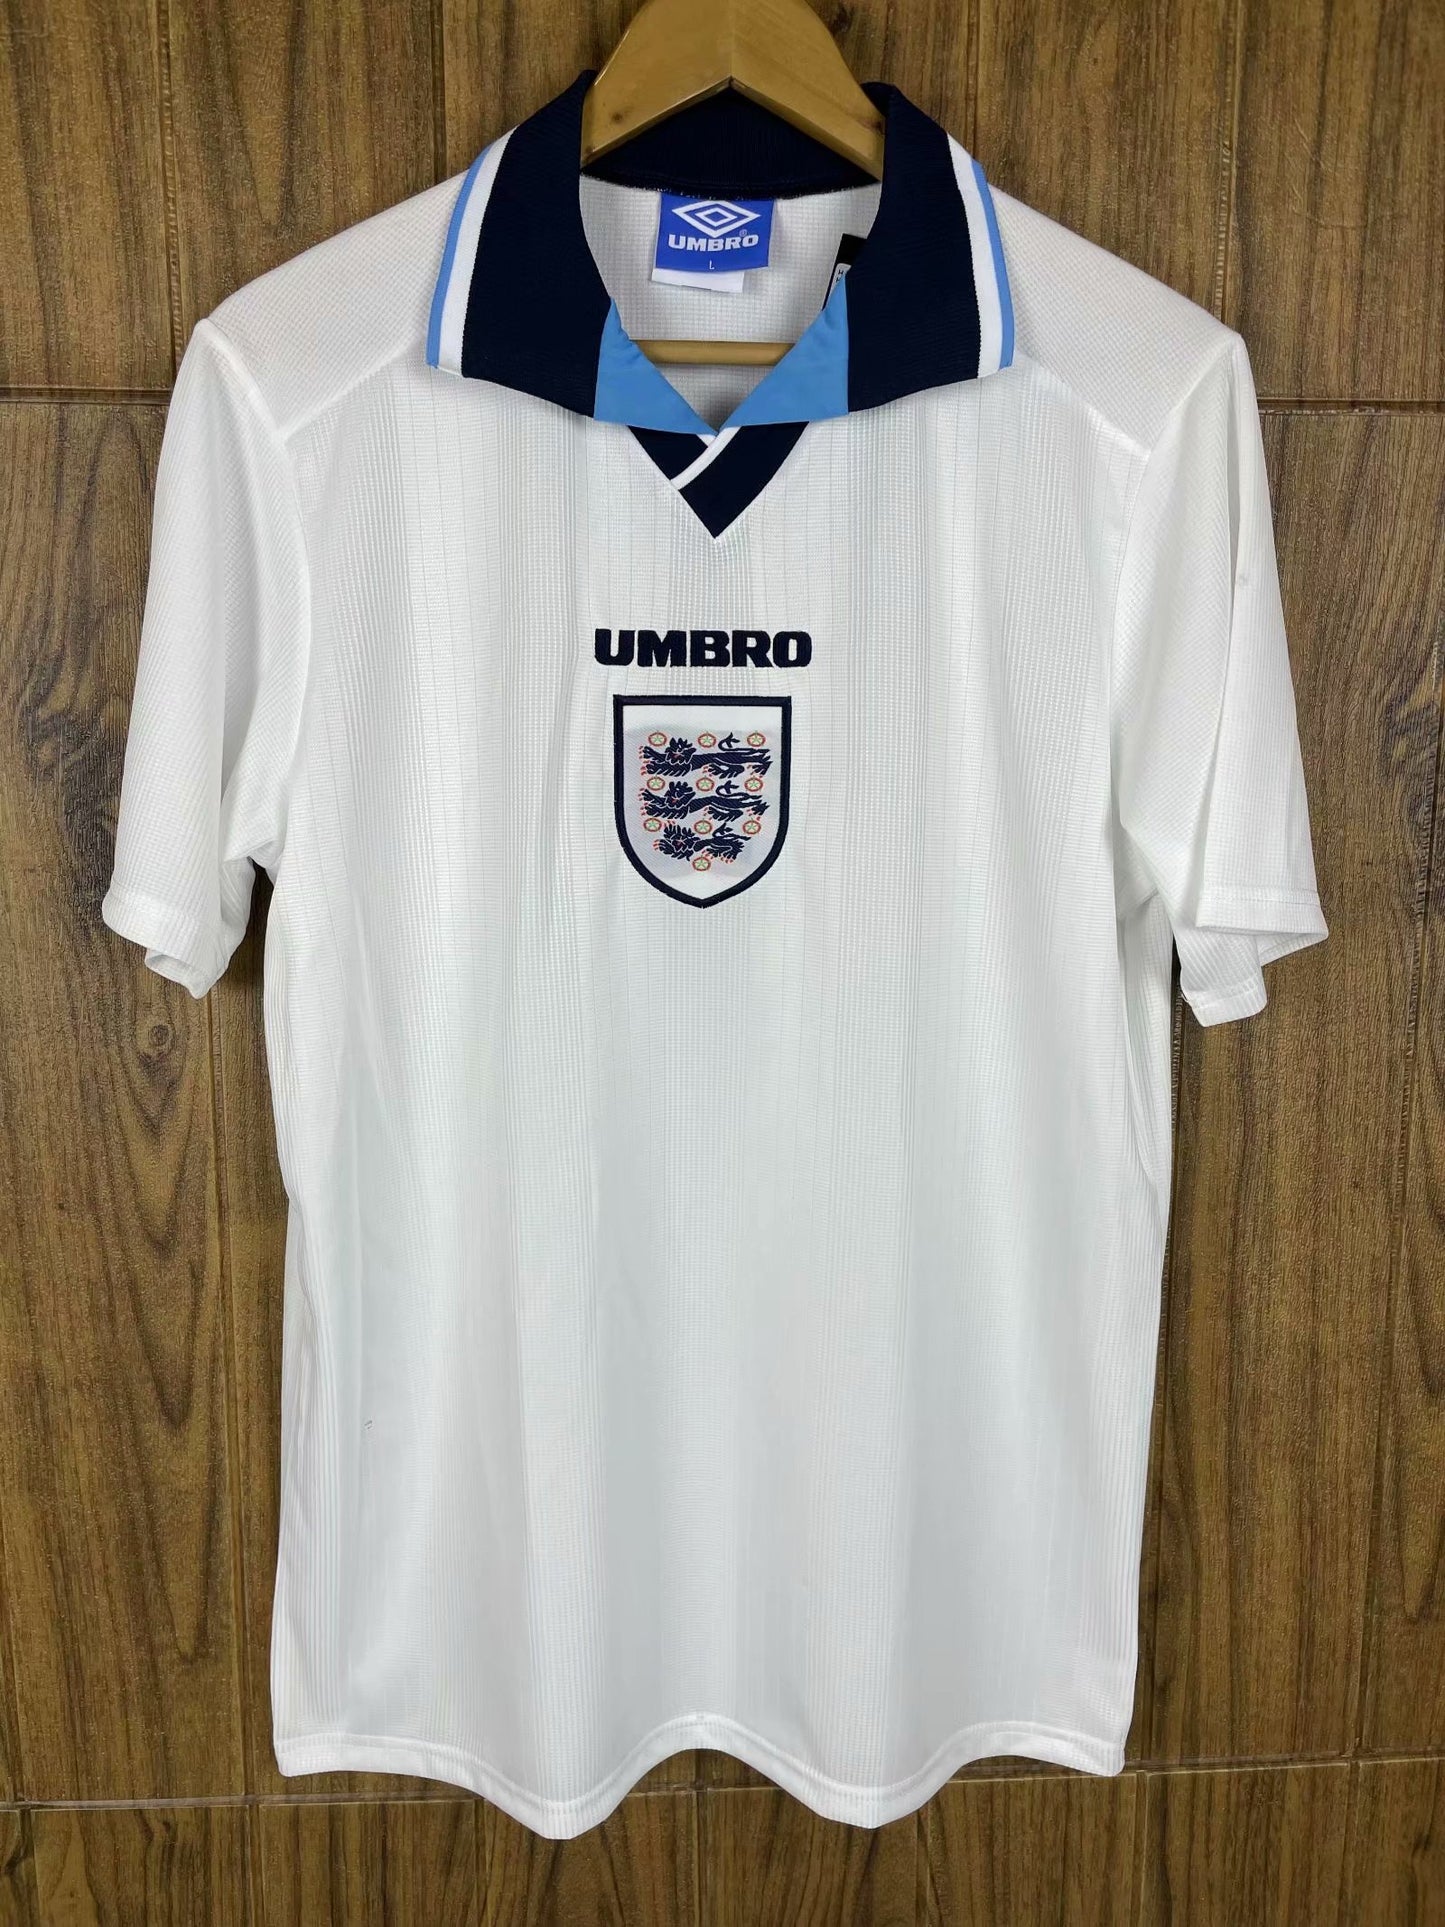 England 1996 retro jersey